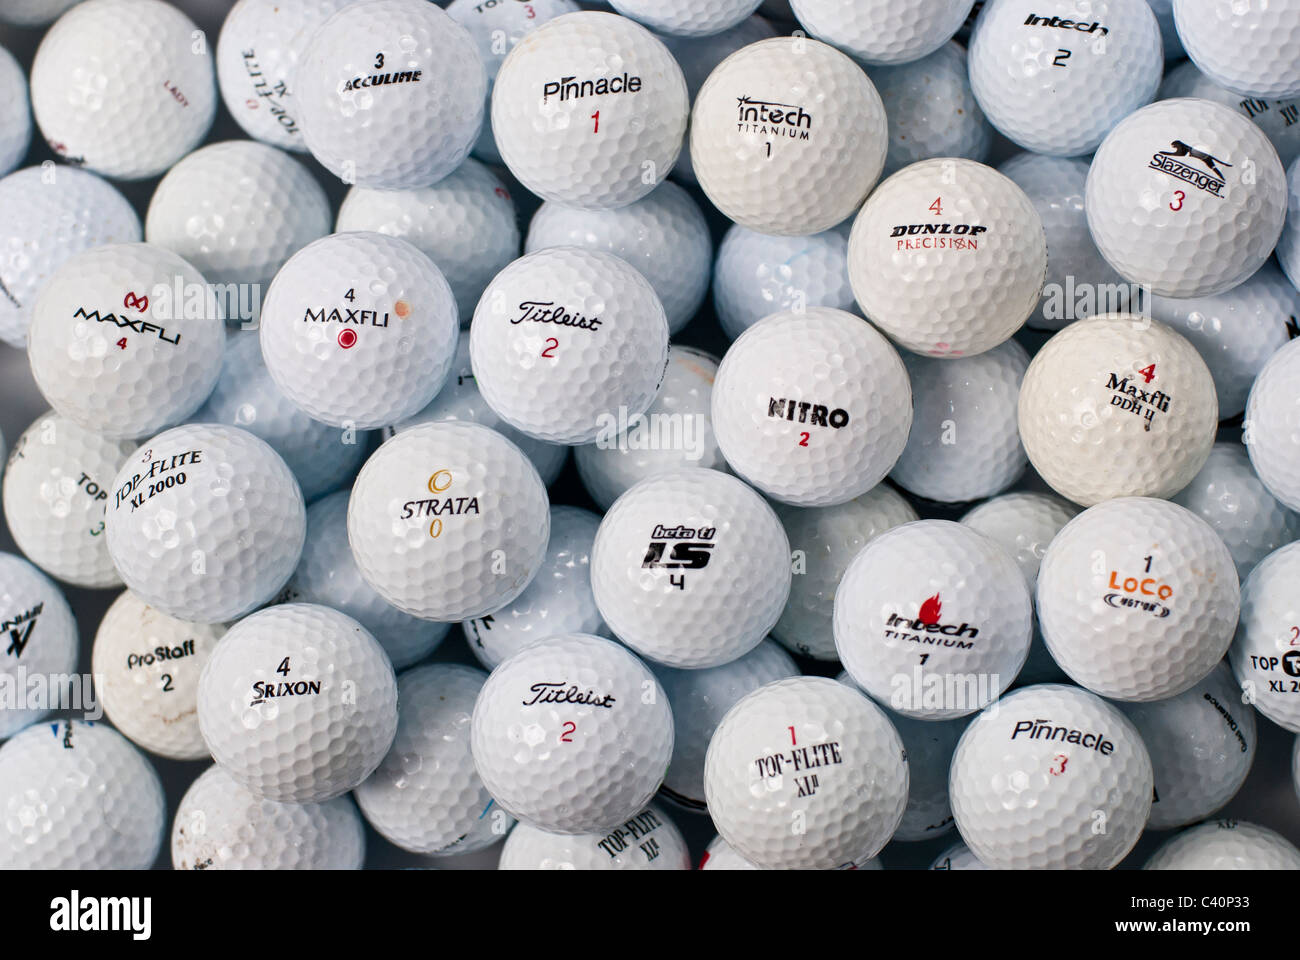 Bacteriën Meter Zwijgend Golf Balls showing variety of logos and brands Stock Photo - Alamy